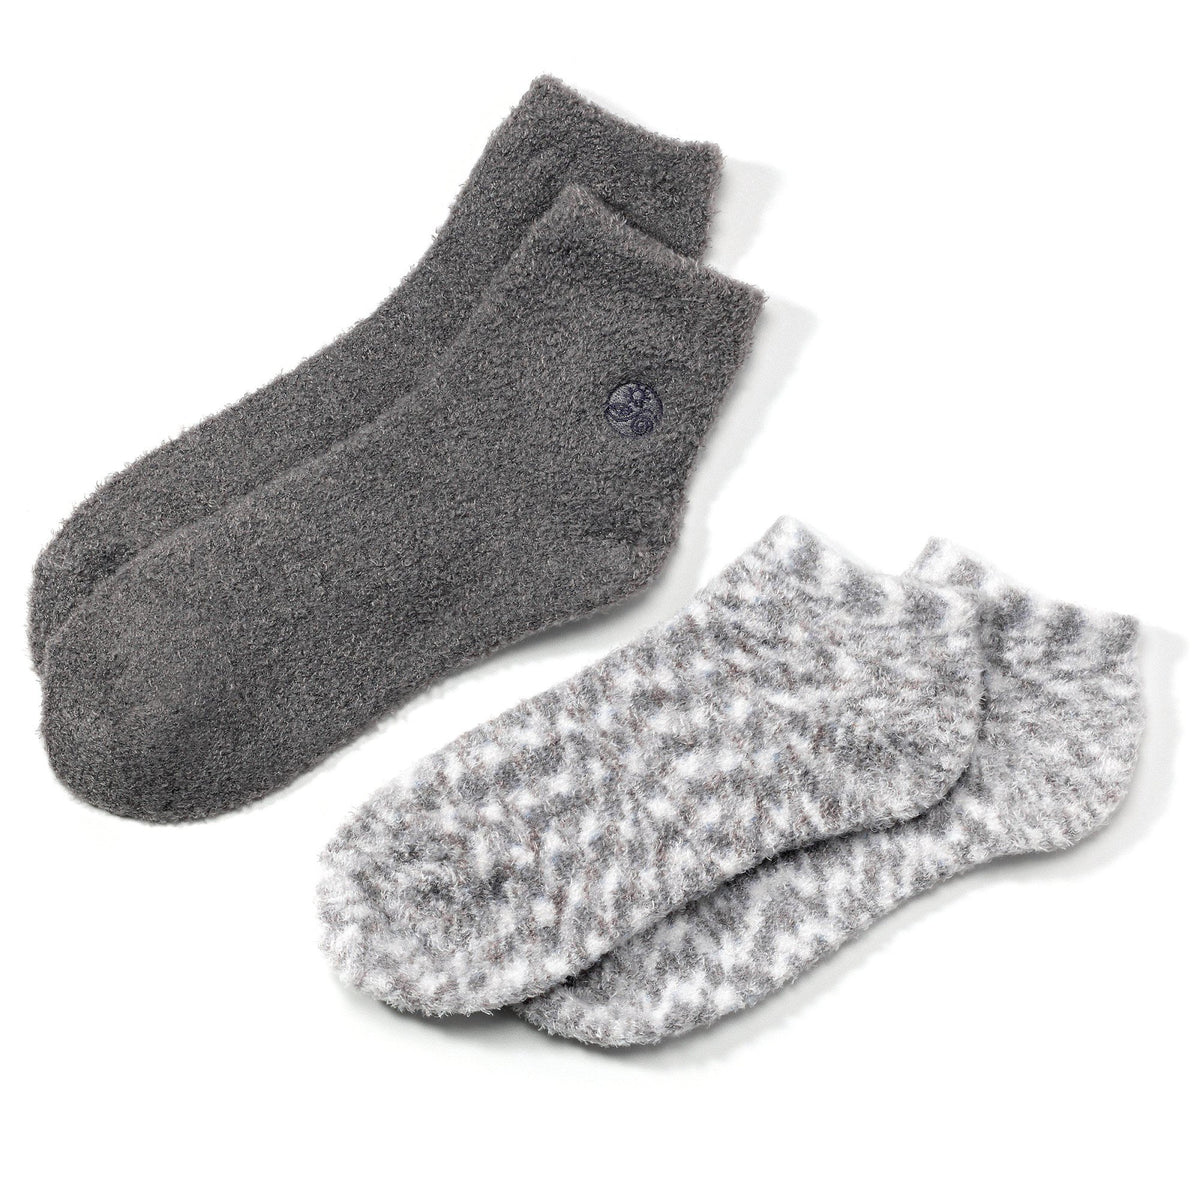 Earth Therapeutics Aloe Socks, Grey, 2 ct Pack